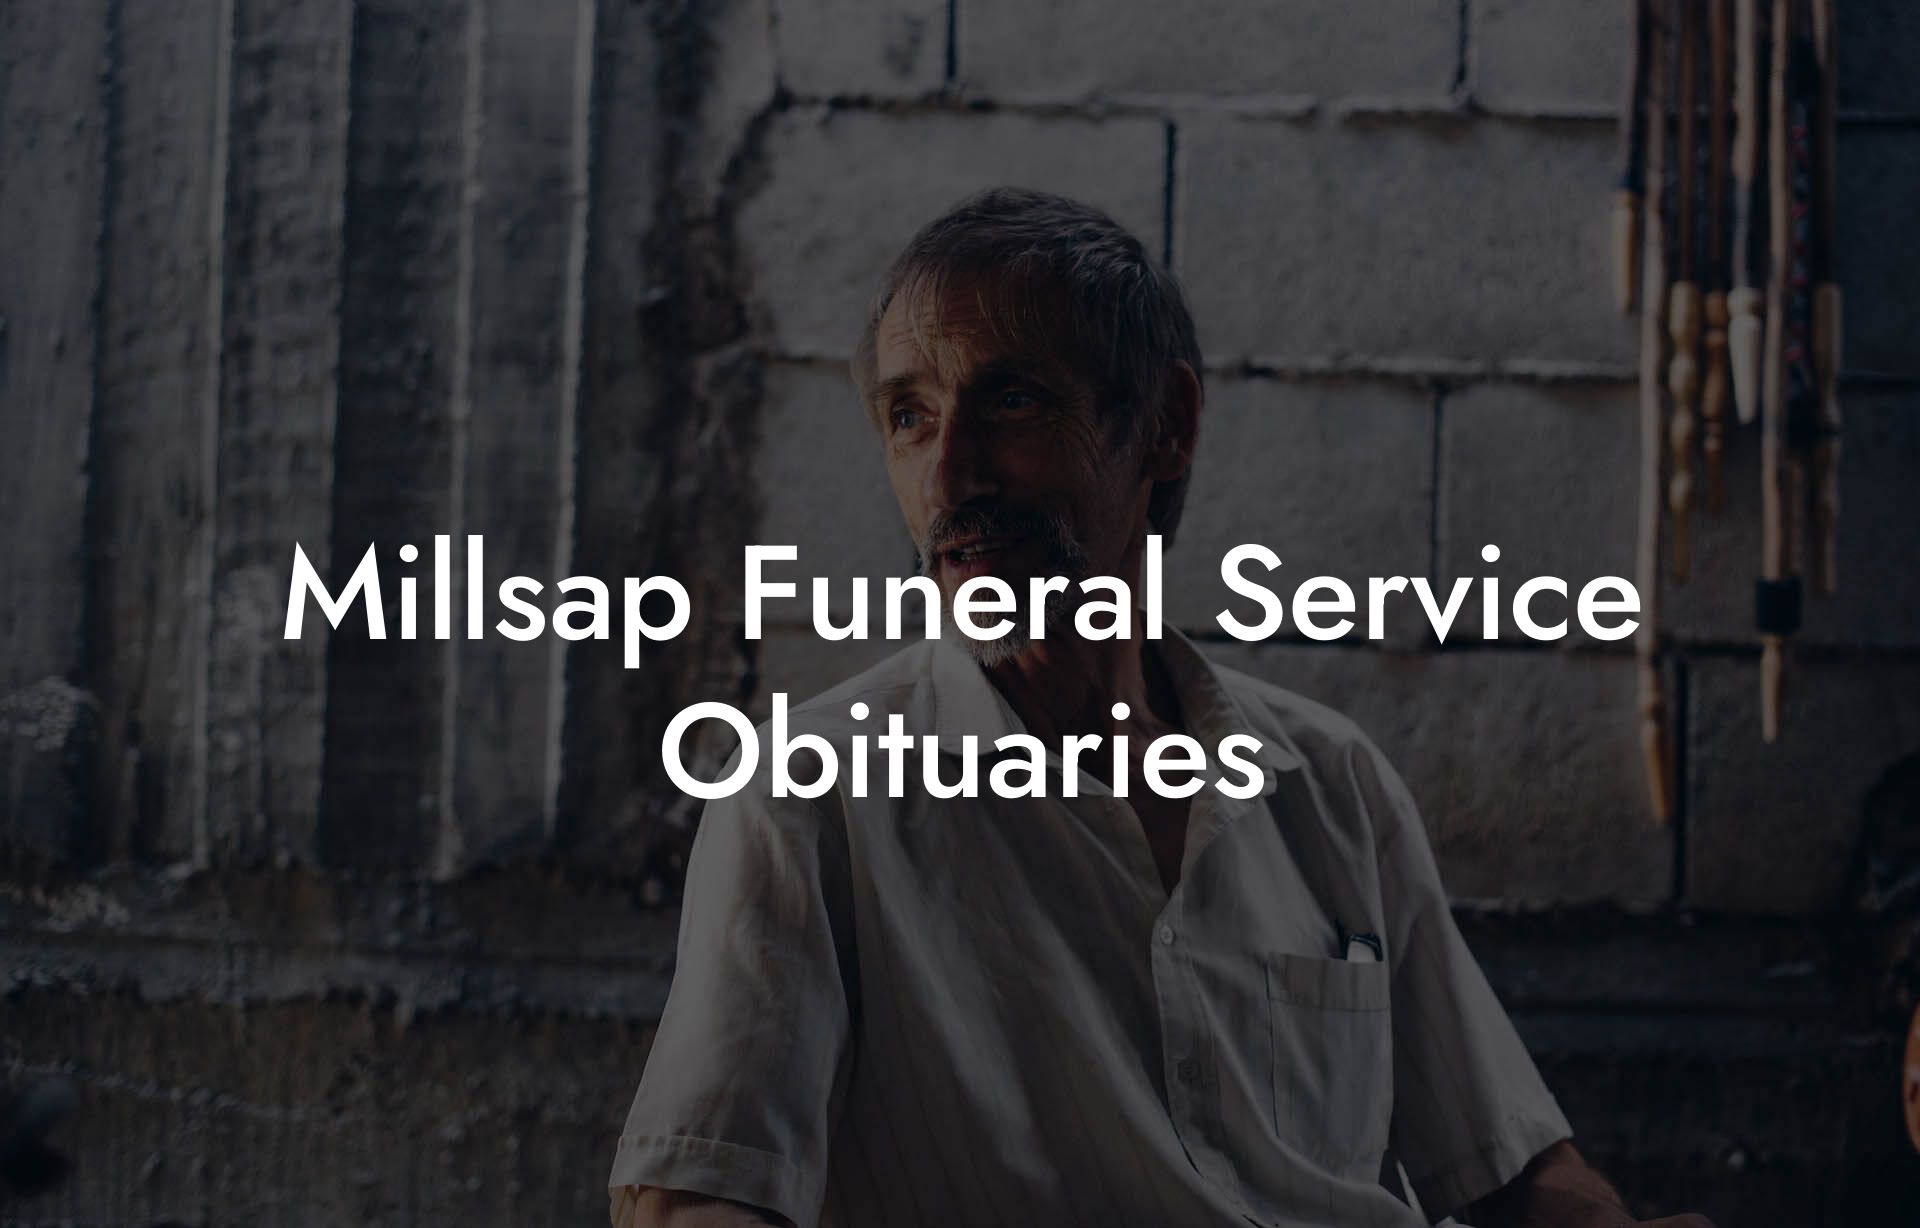 Millsap Funeral Service Obituaries